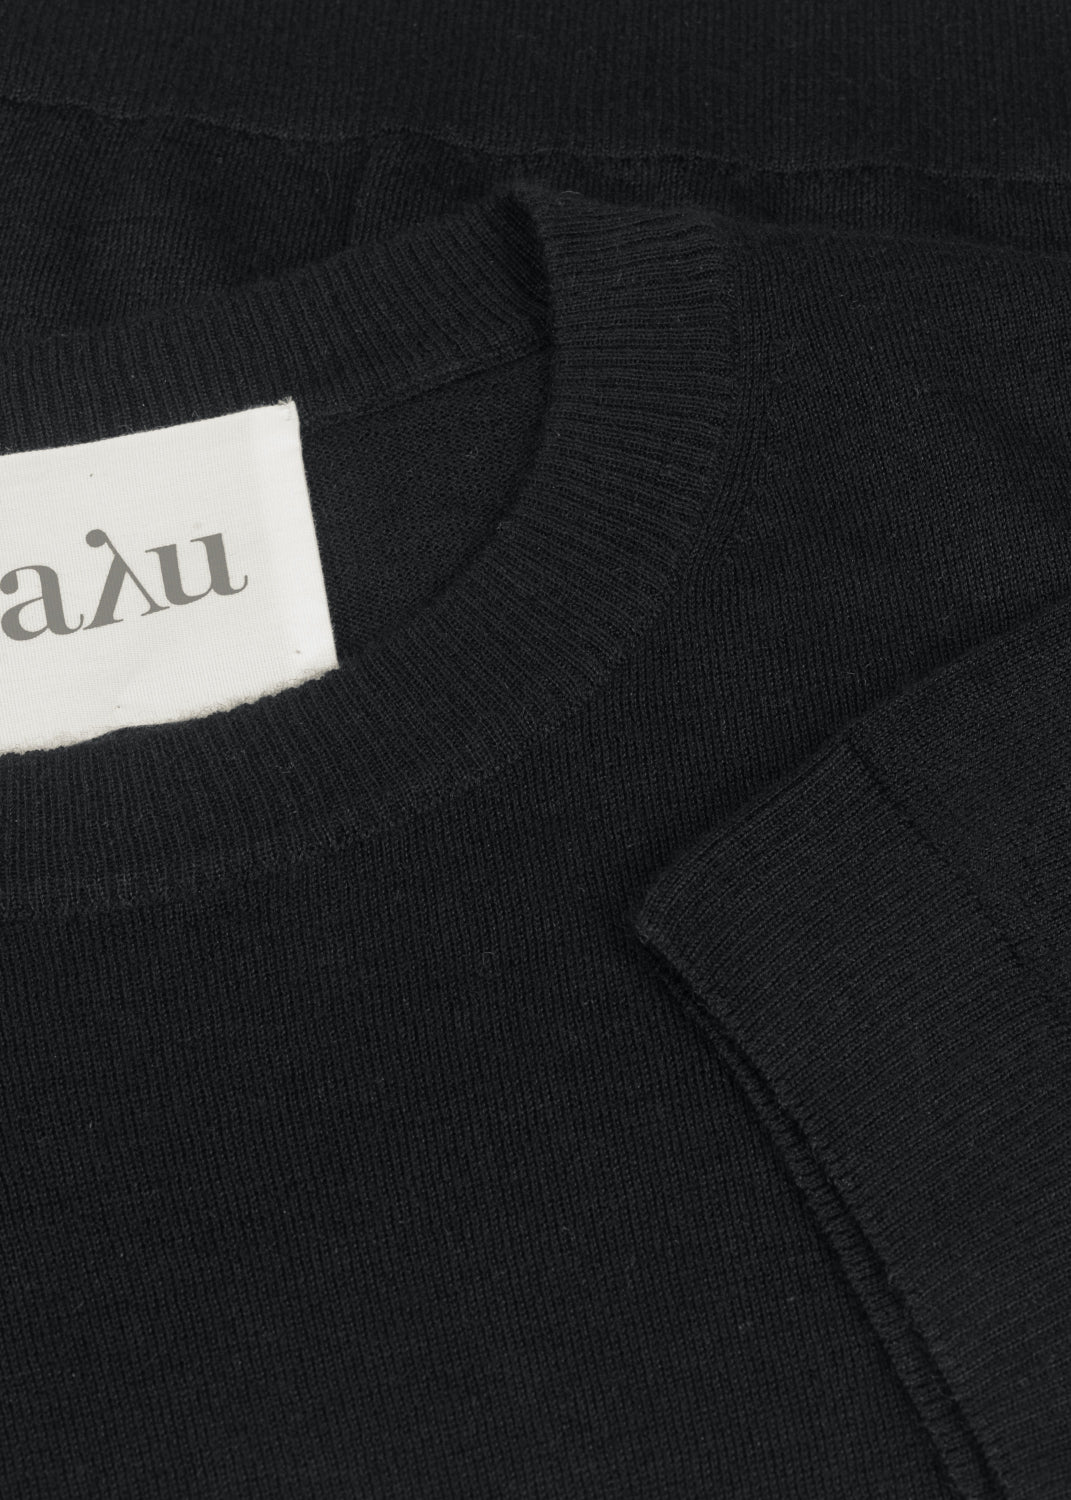 Aiayu "Lalitpur" Black cashmere/lin